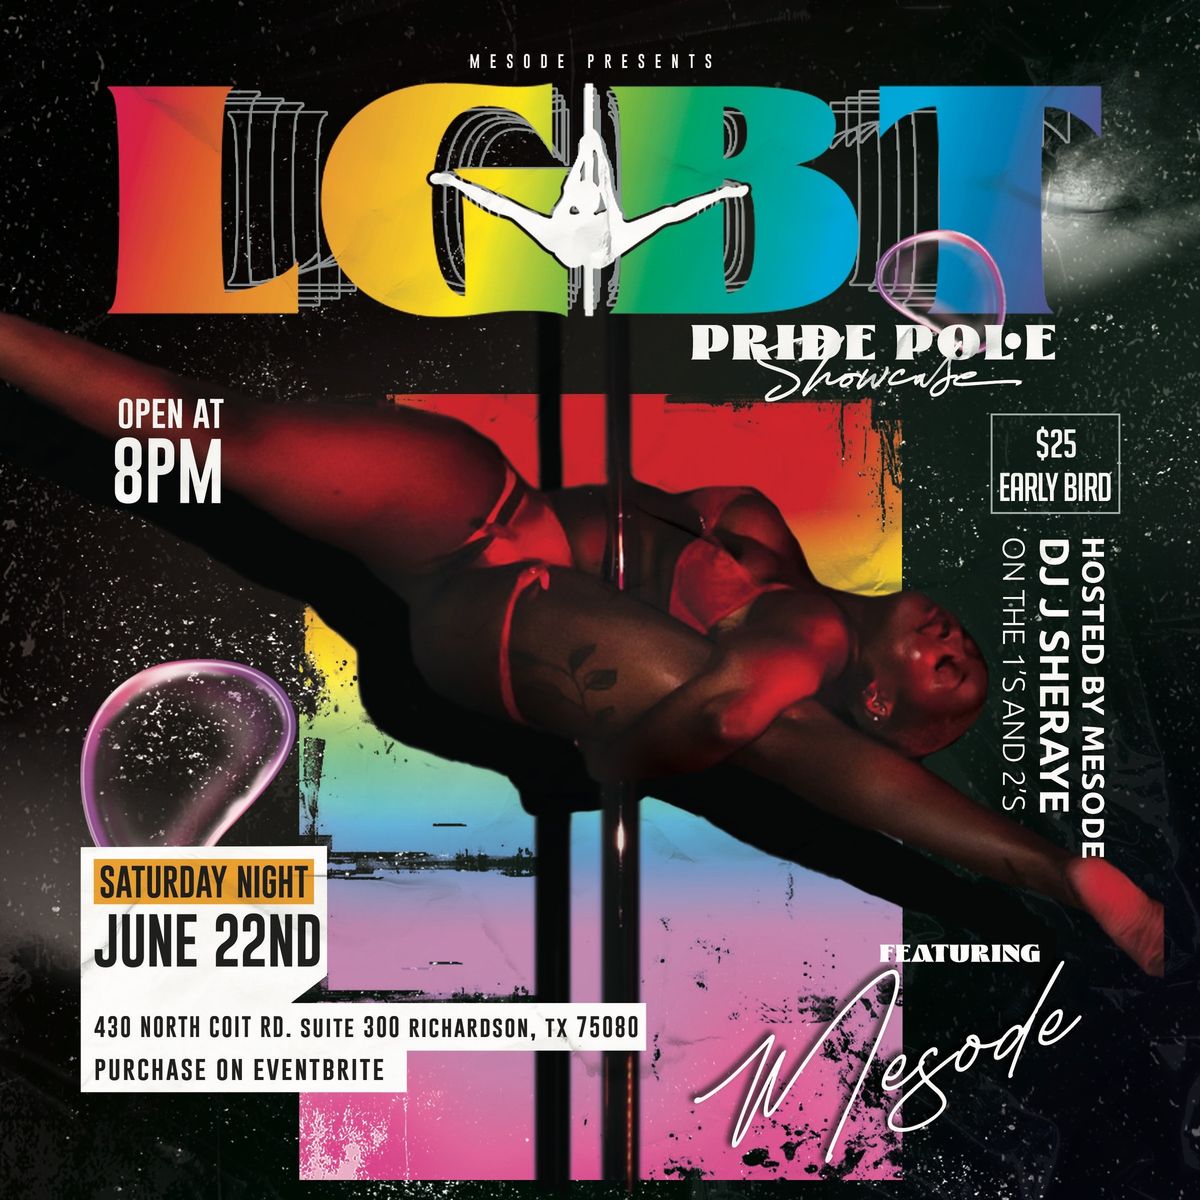 LGBT Pride Pole Showcase